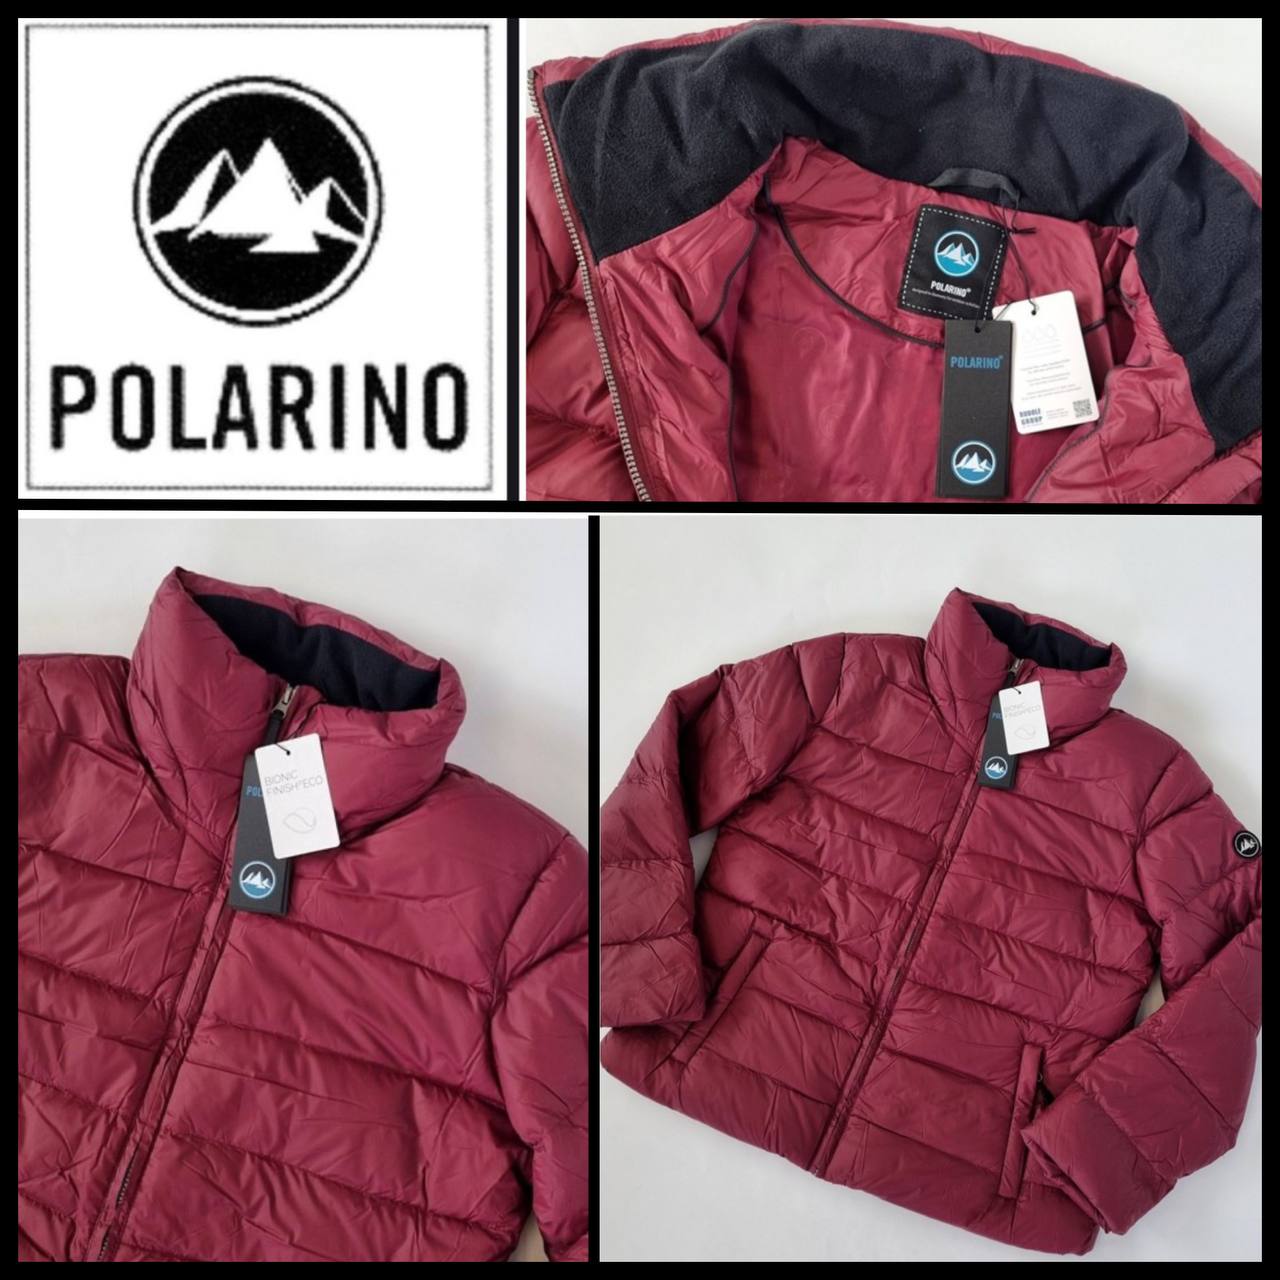 Natural women's down jackets from Polarino